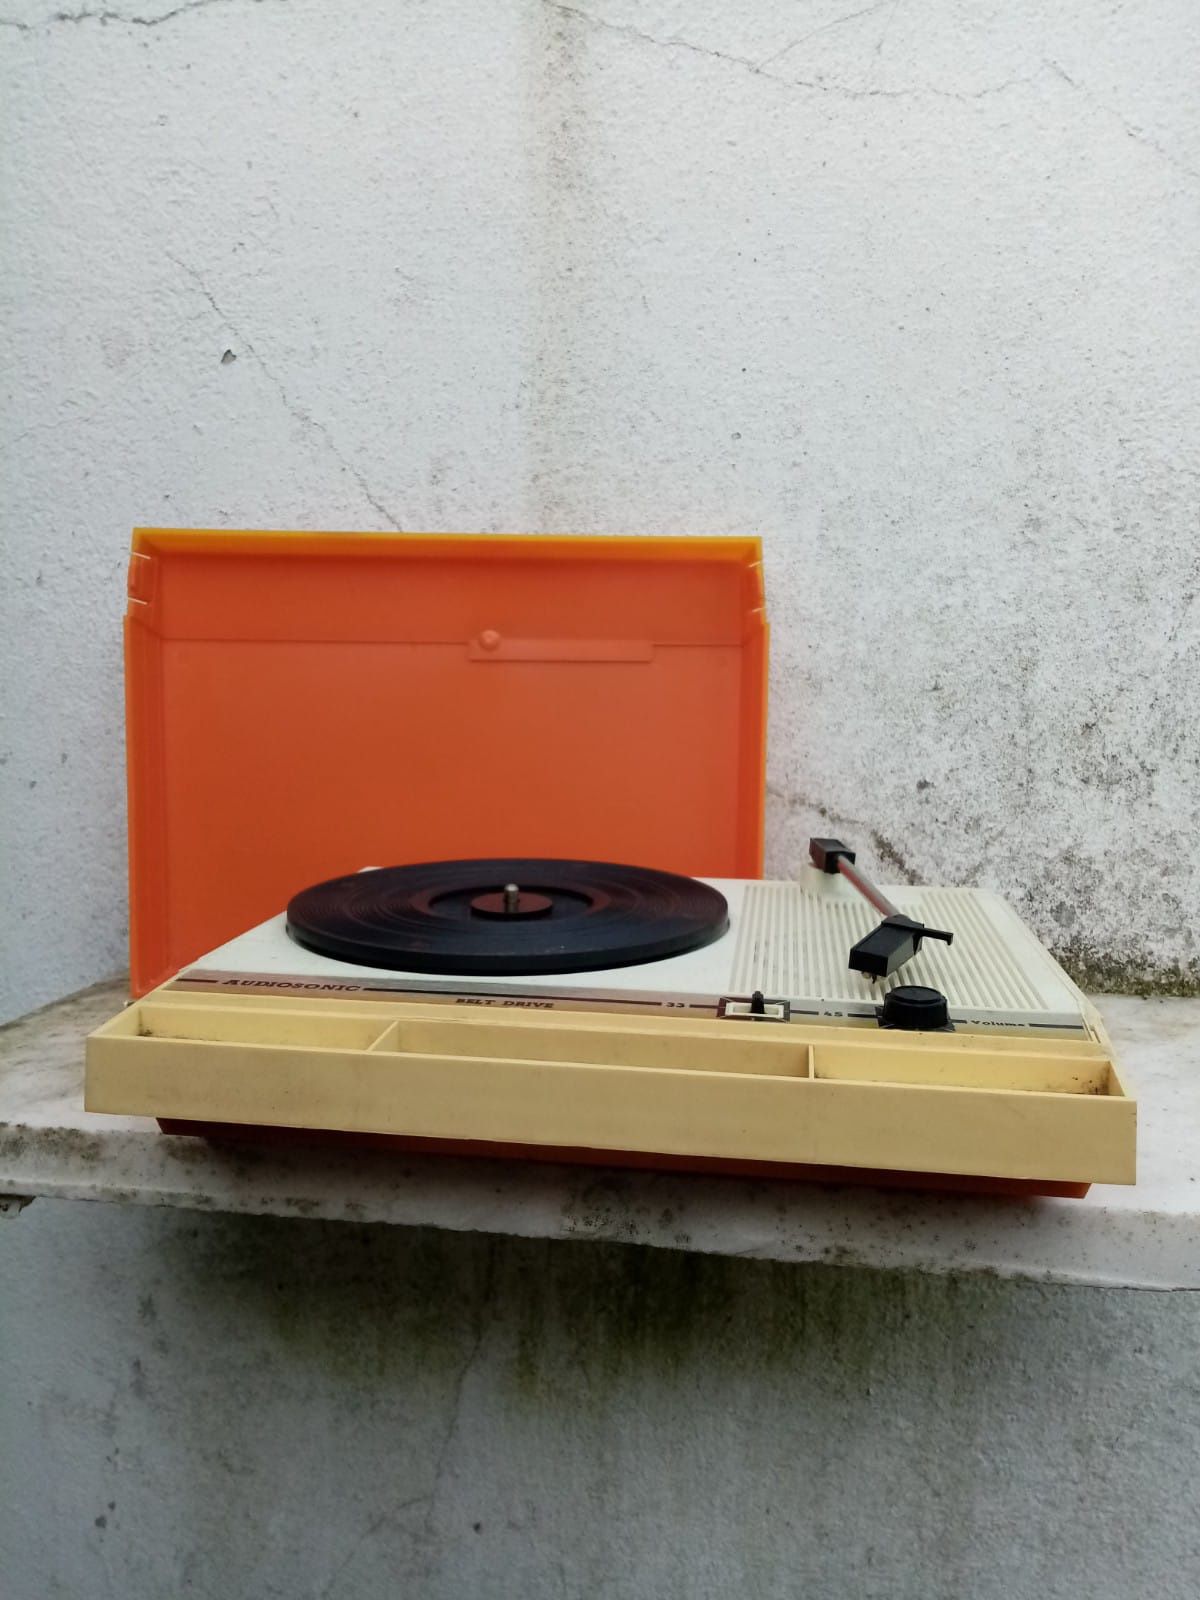 Gira discos audiosonic, marca Capri